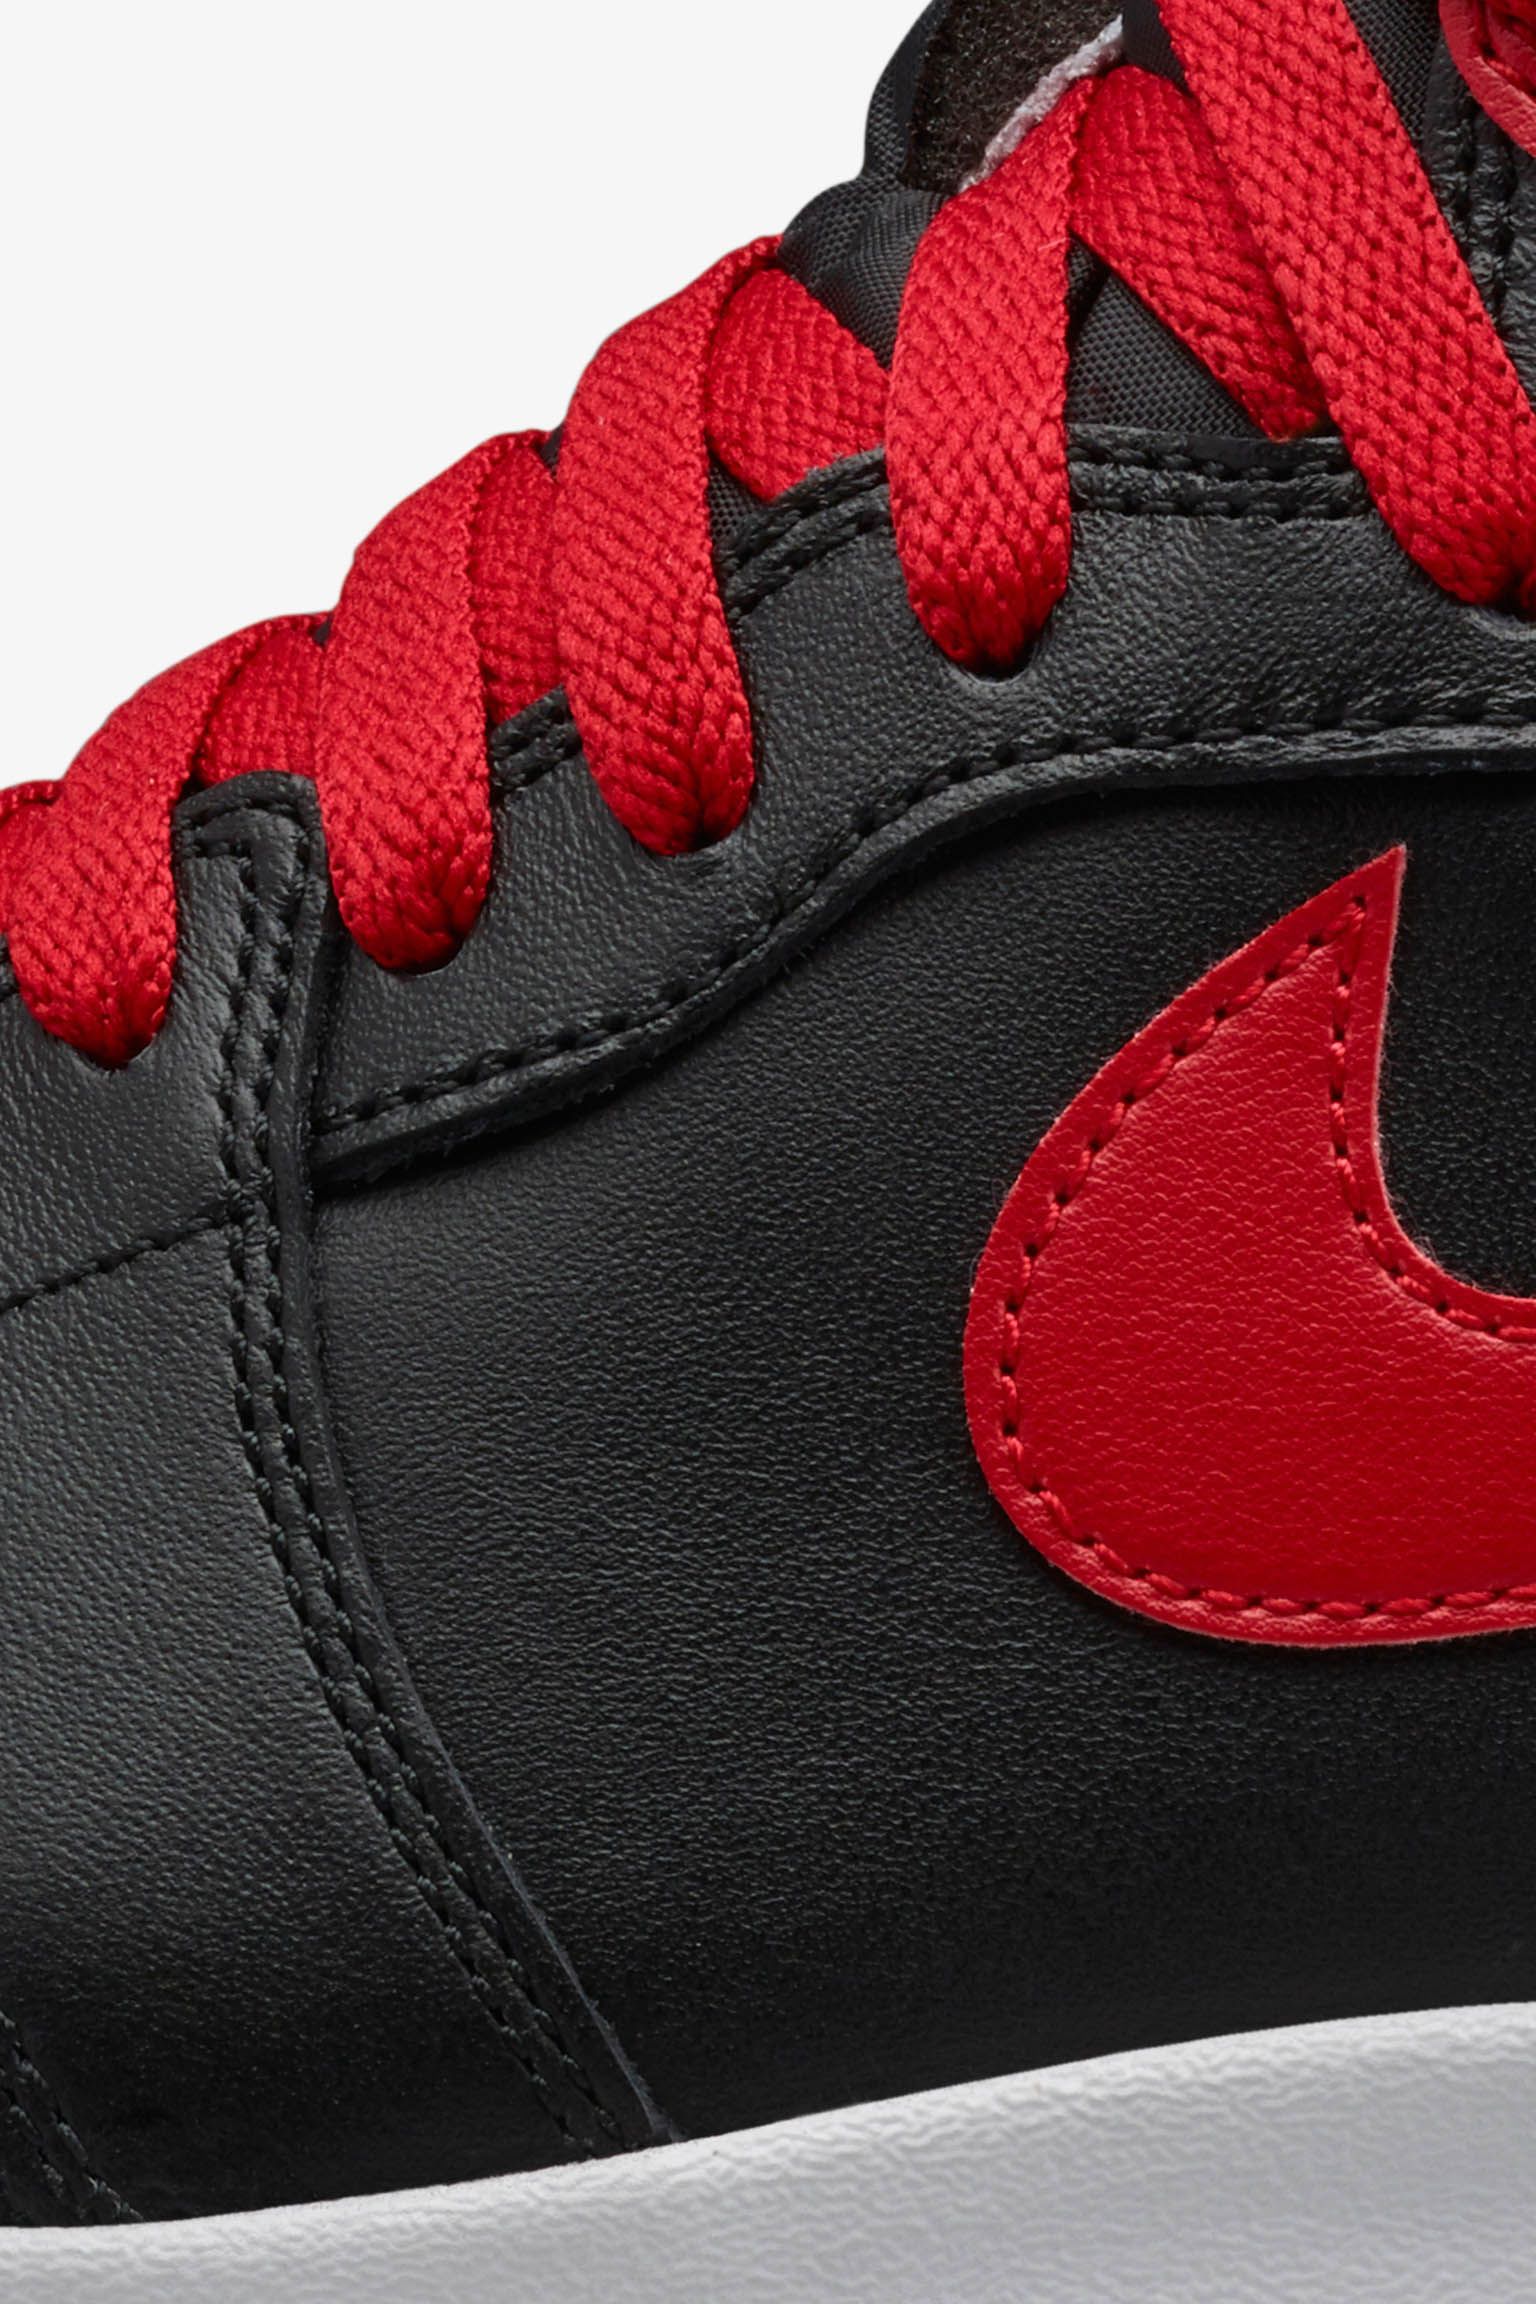 Recuperar Doctrina afeitado Air Jordan 1 Retro 'The Return' Release Date. Nike SNKRS